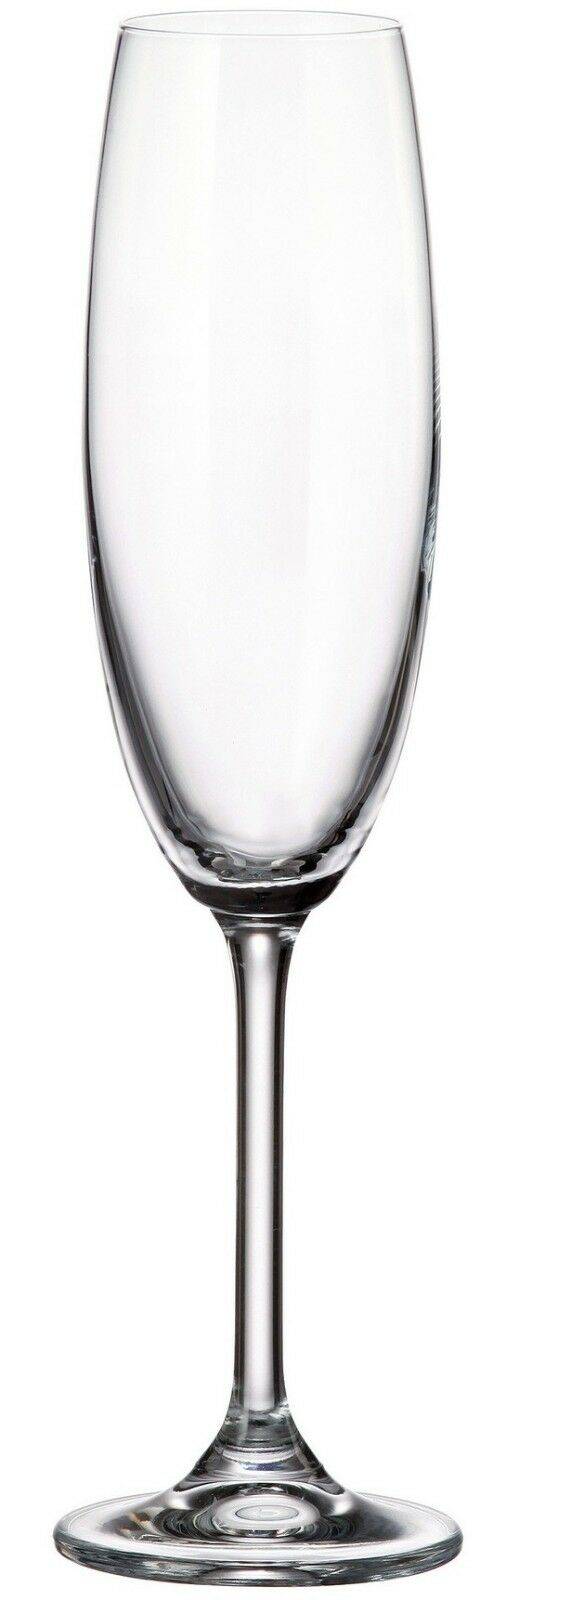 Crystal bohemia conjunto de taça de champanhe (6 unidades)